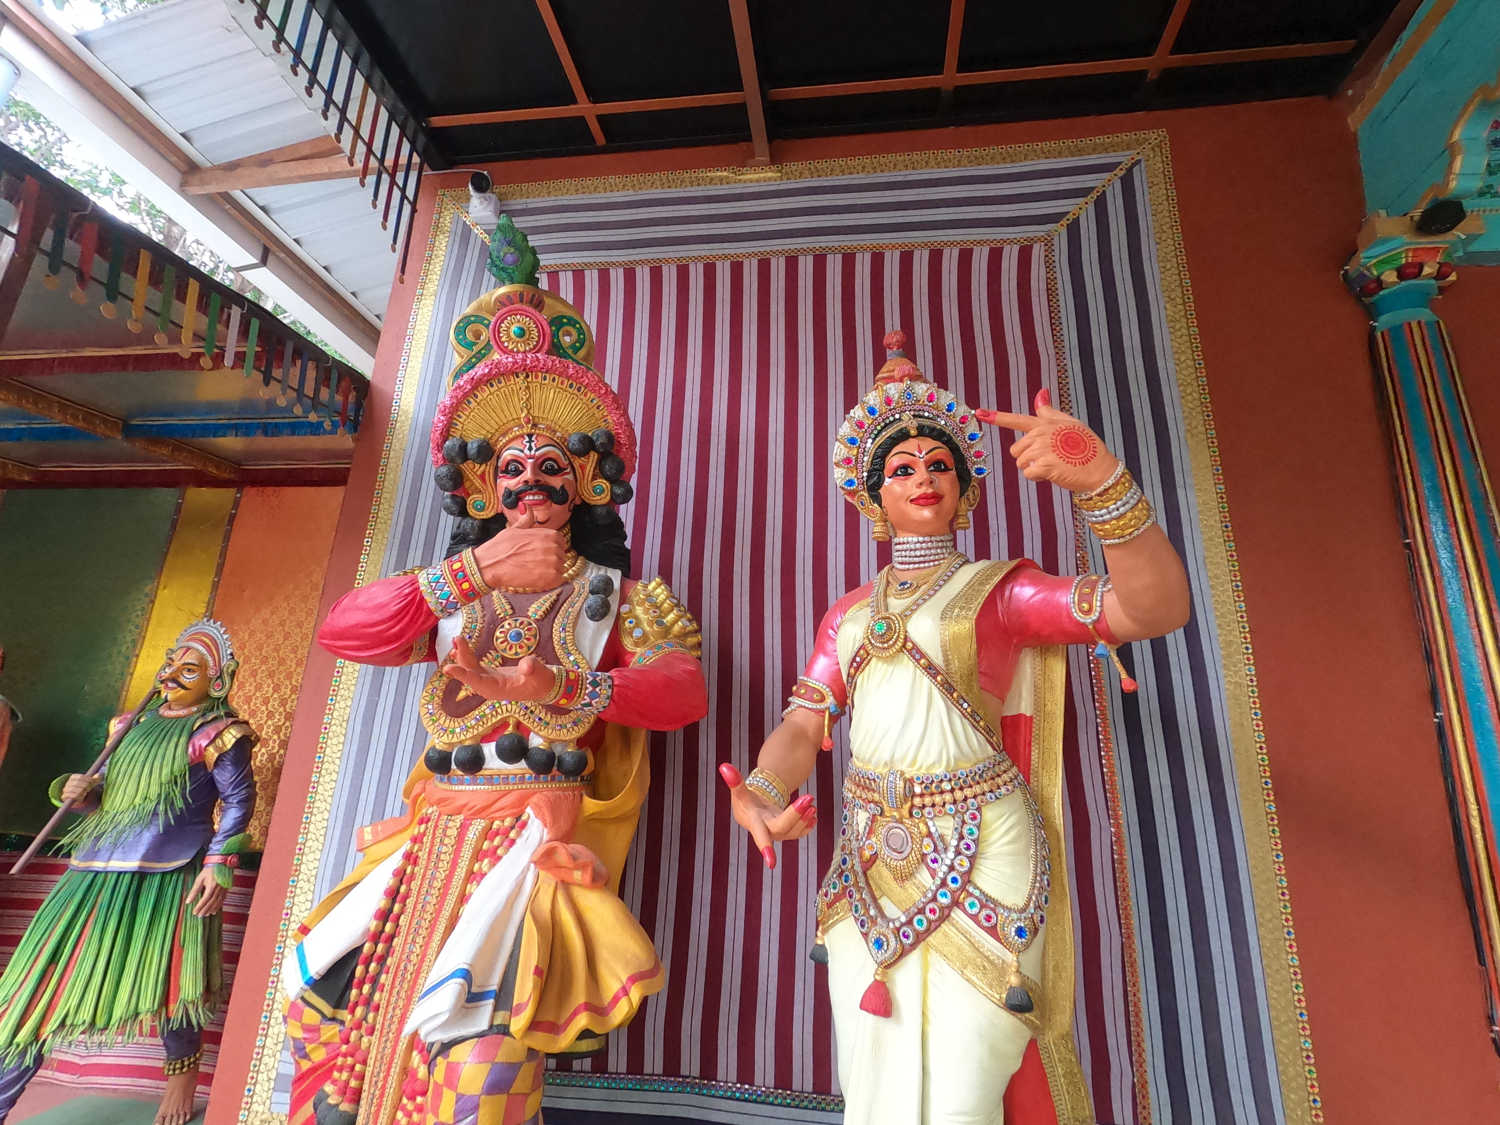 karnataka tradition, culture, bangalore